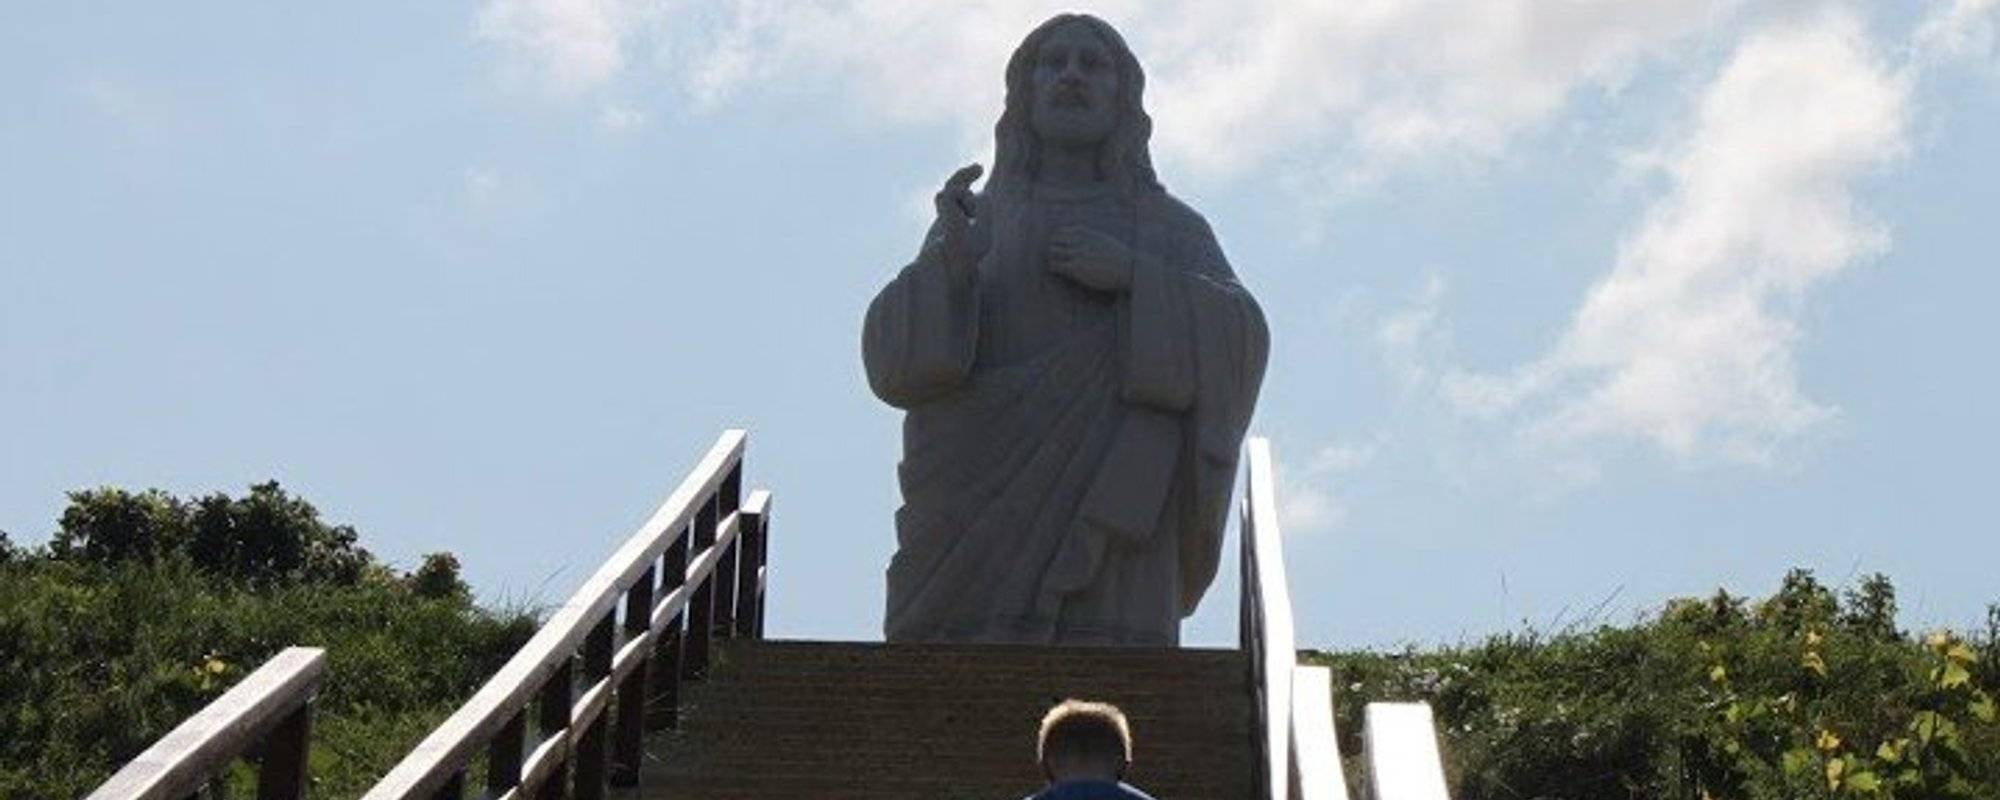 The Jesus Statue in Tarcal, Hungary!